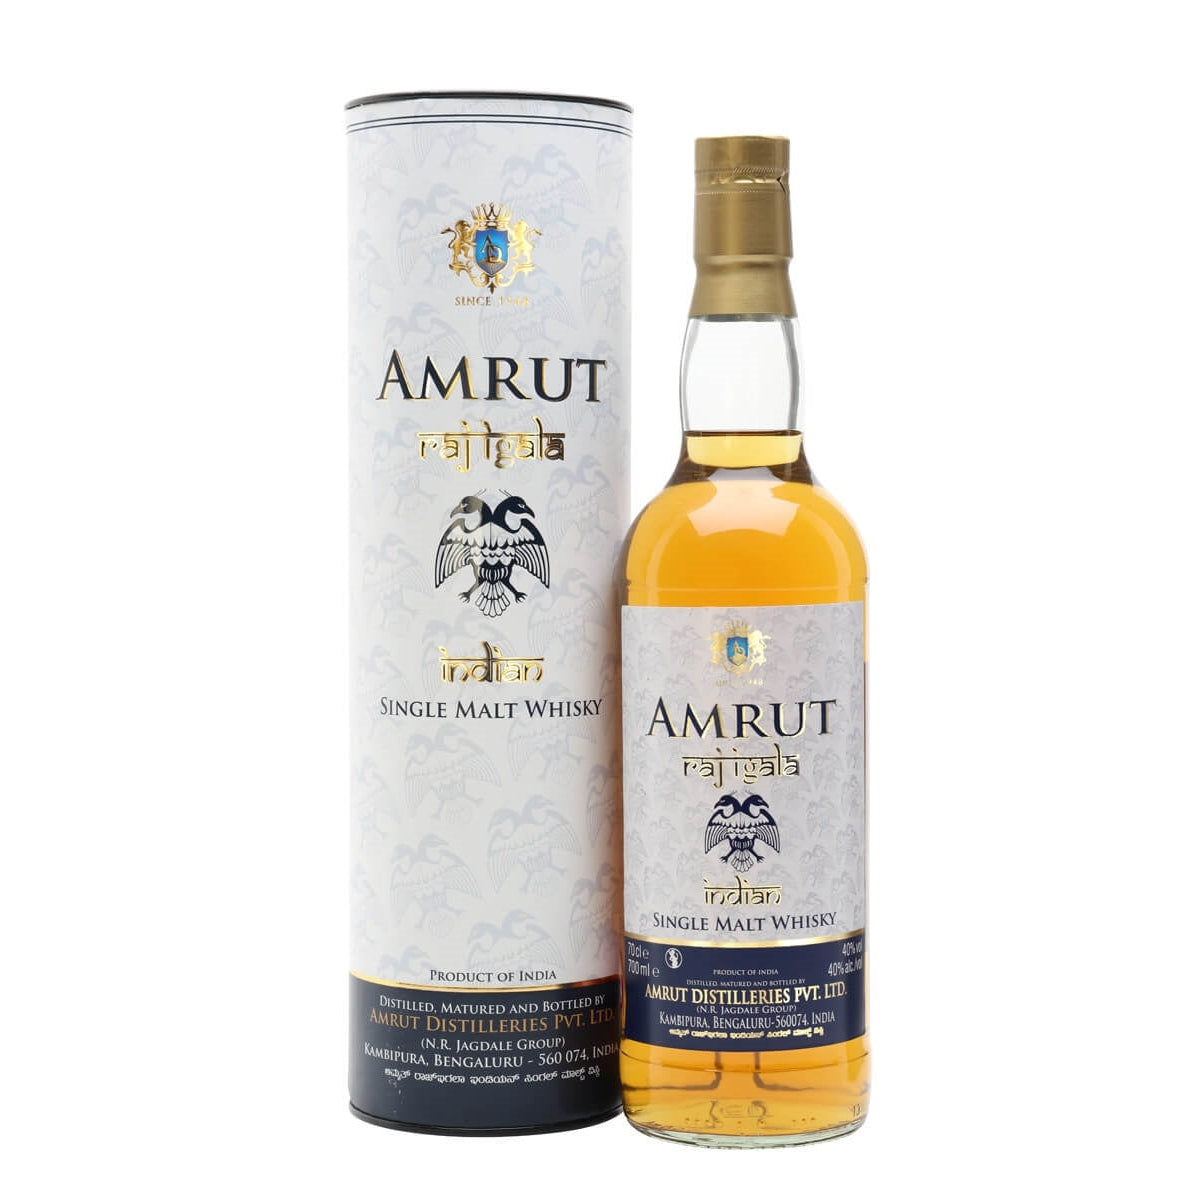 Amrut RAJ IGALA Indian Single Malt Whisky 40% Vol. 0,7l in Giftbox